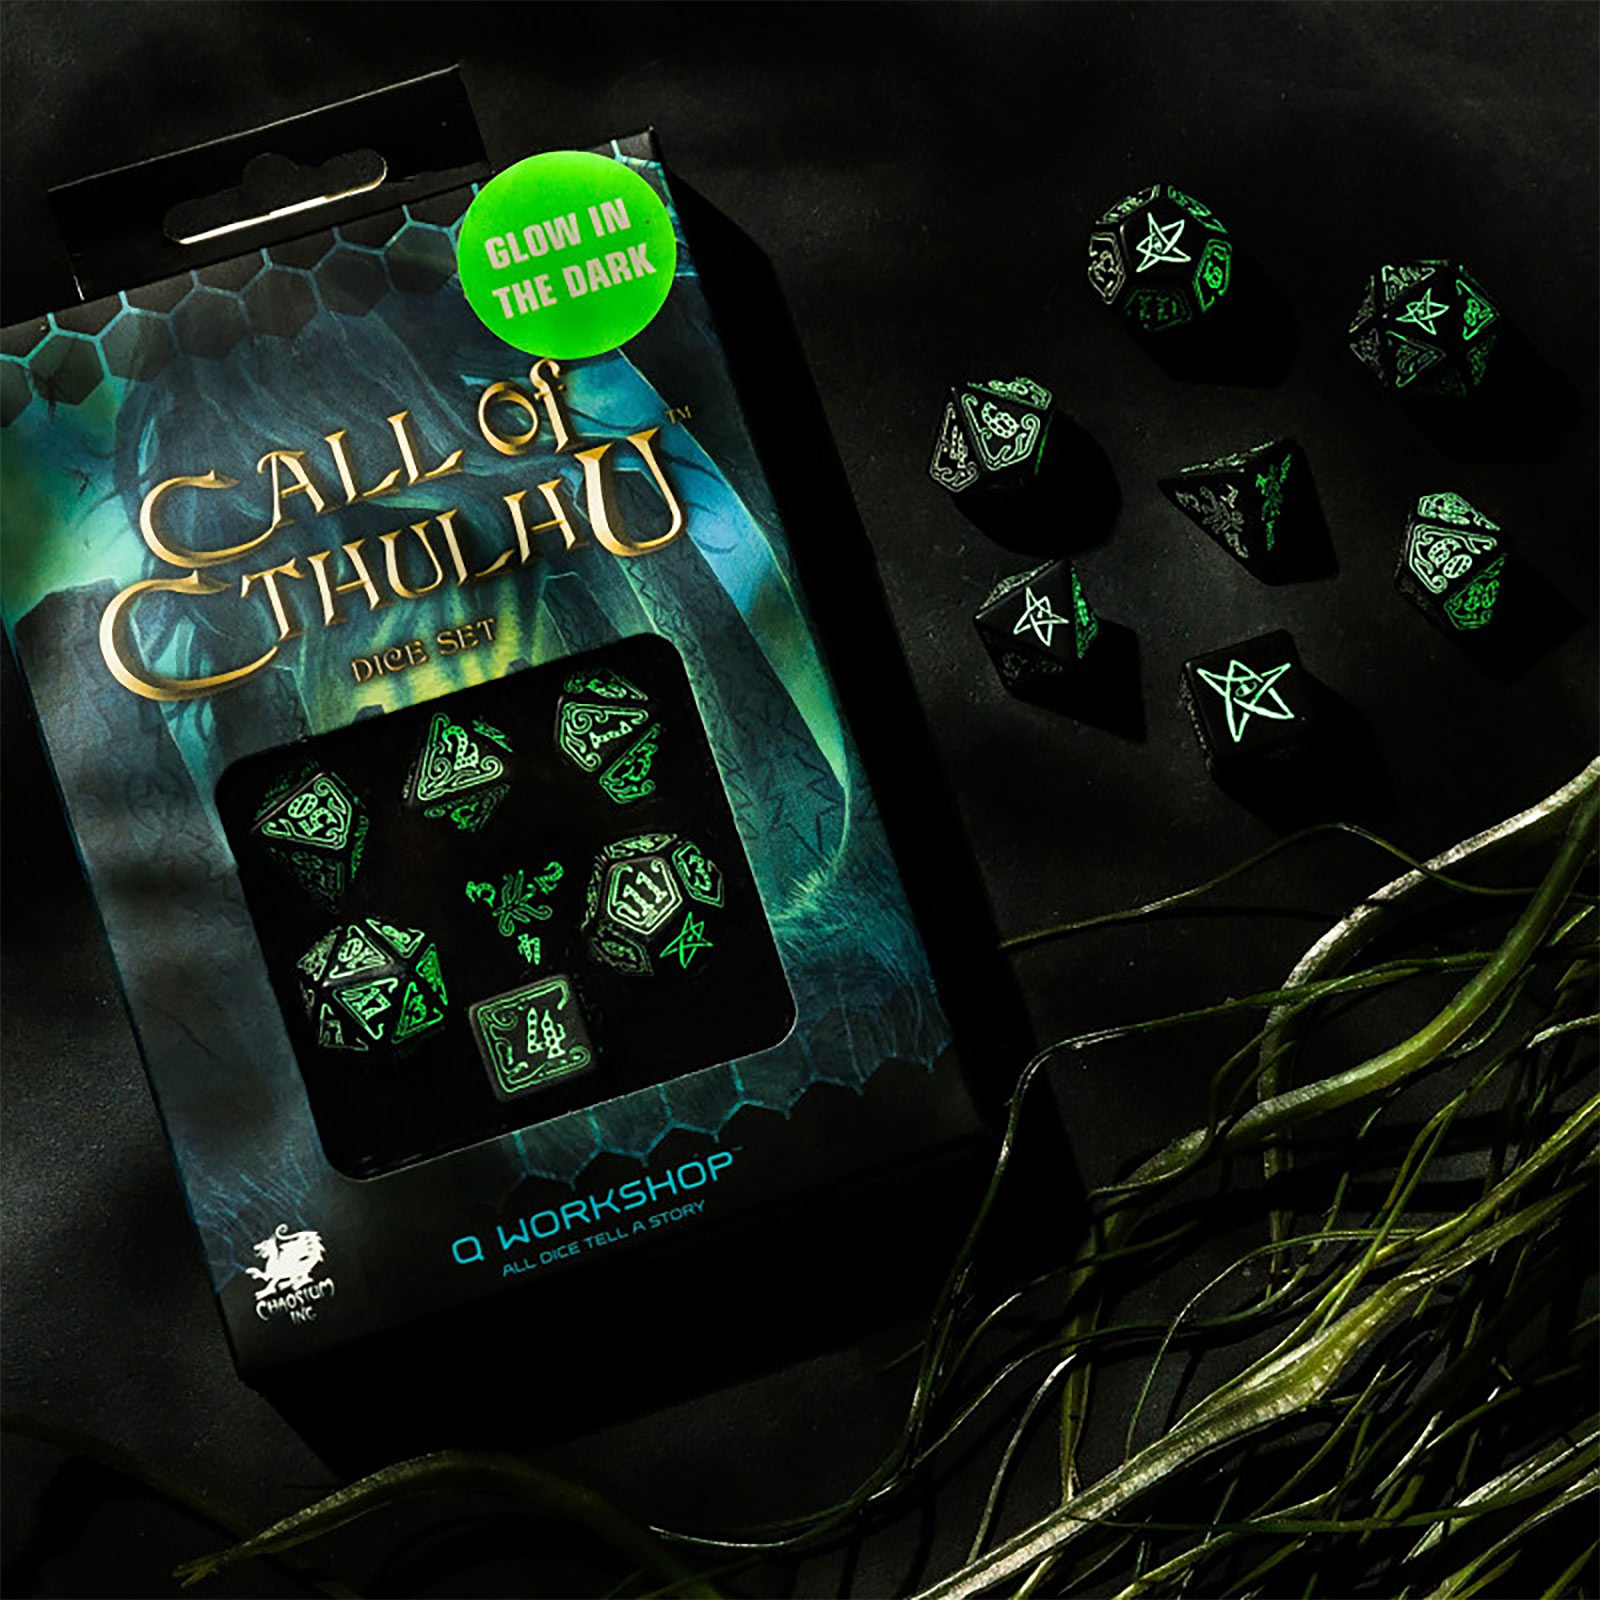 Call of Cthulhu Glow in the Dark RPG Dice Set 7pcs black